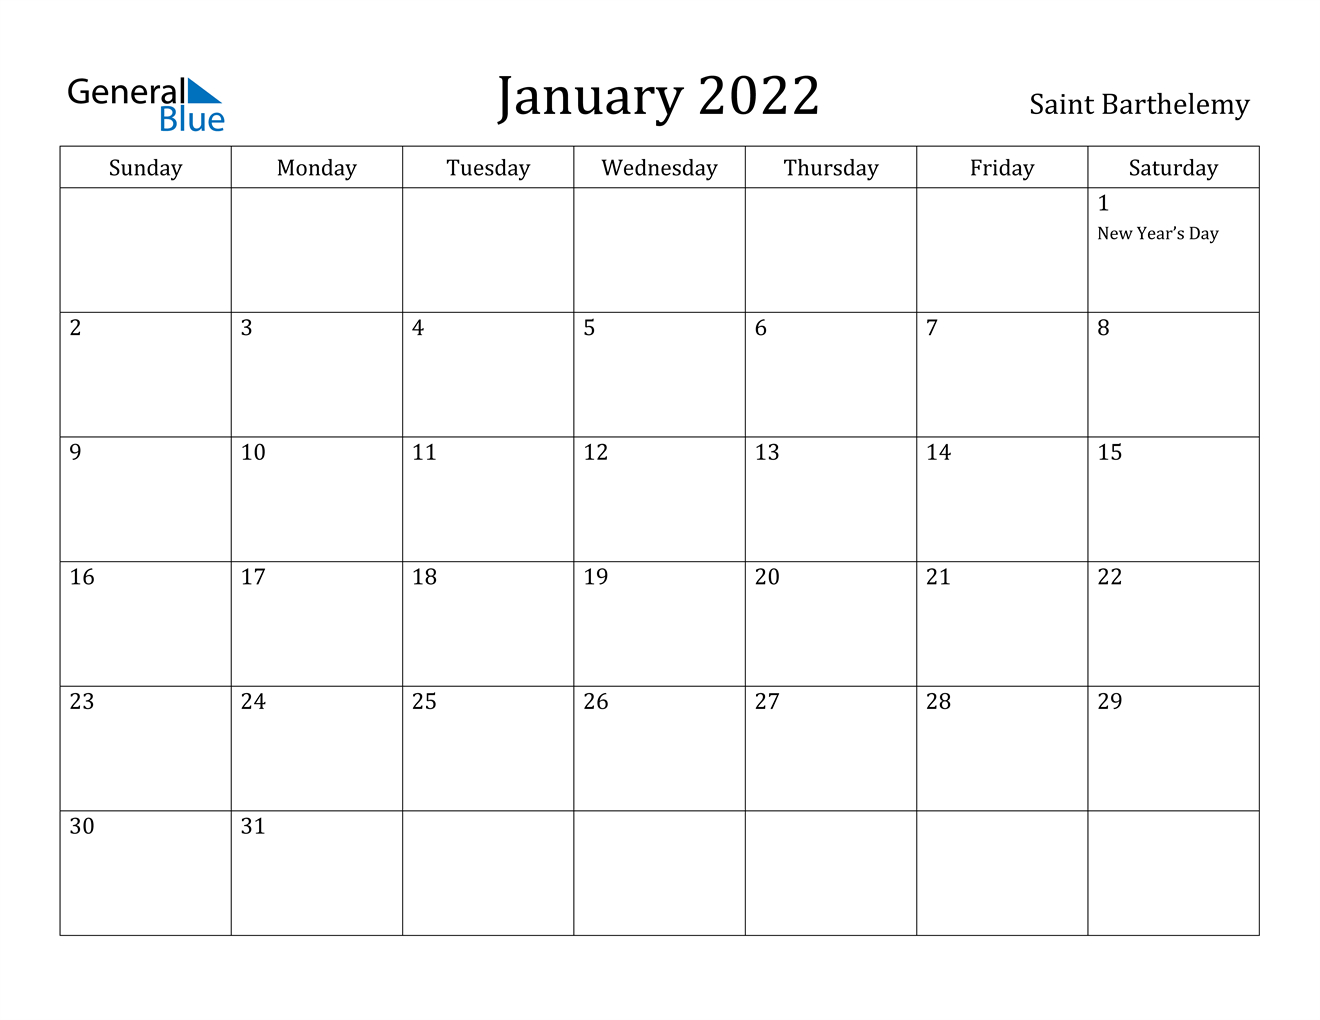 January 2022 Calendar - Saint Barthelemy